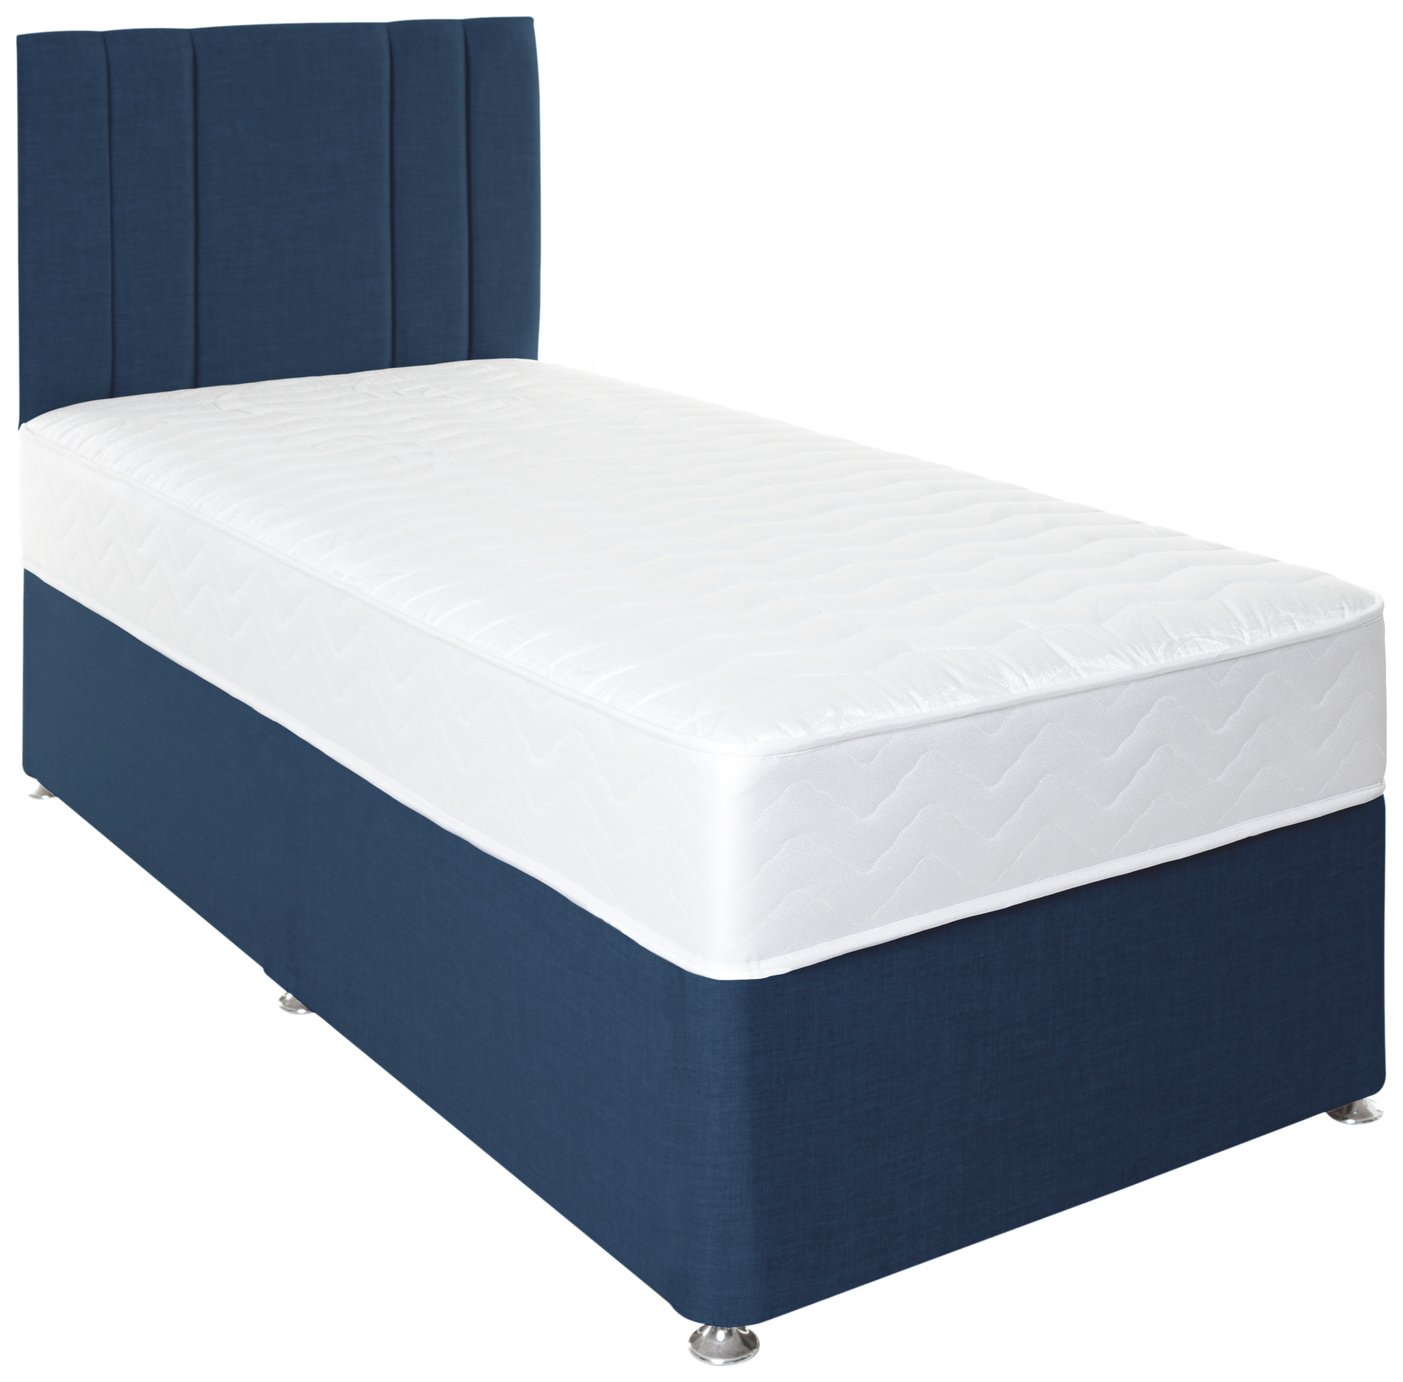 Airpsrung Henlow 1200 Memory Divan Bed and Headboard - Blue at Argos